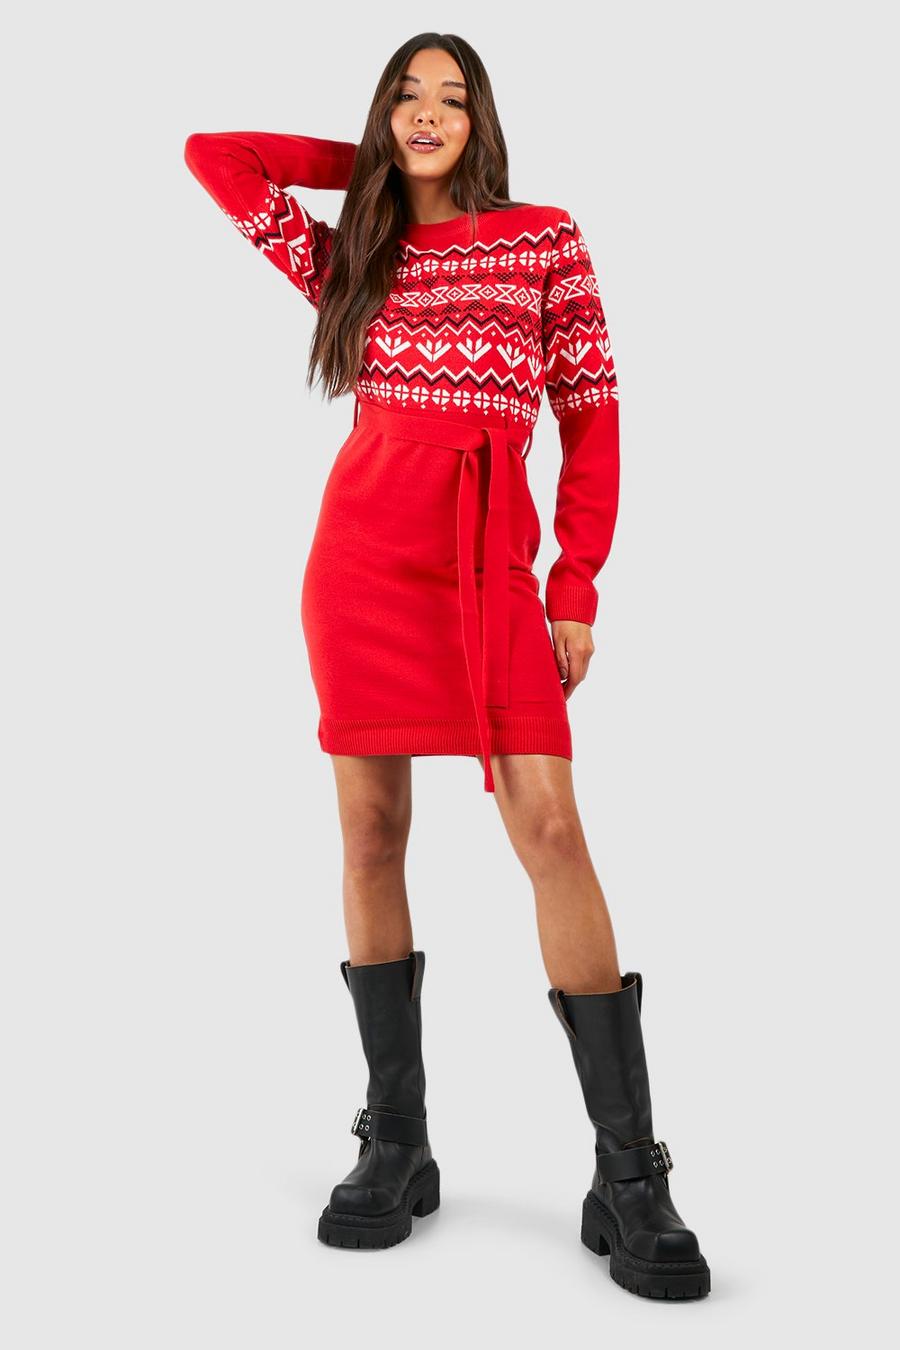 Red שמלת סוודר לחג המולד עם דוגמה בסגנון פייר אייל וחגורה